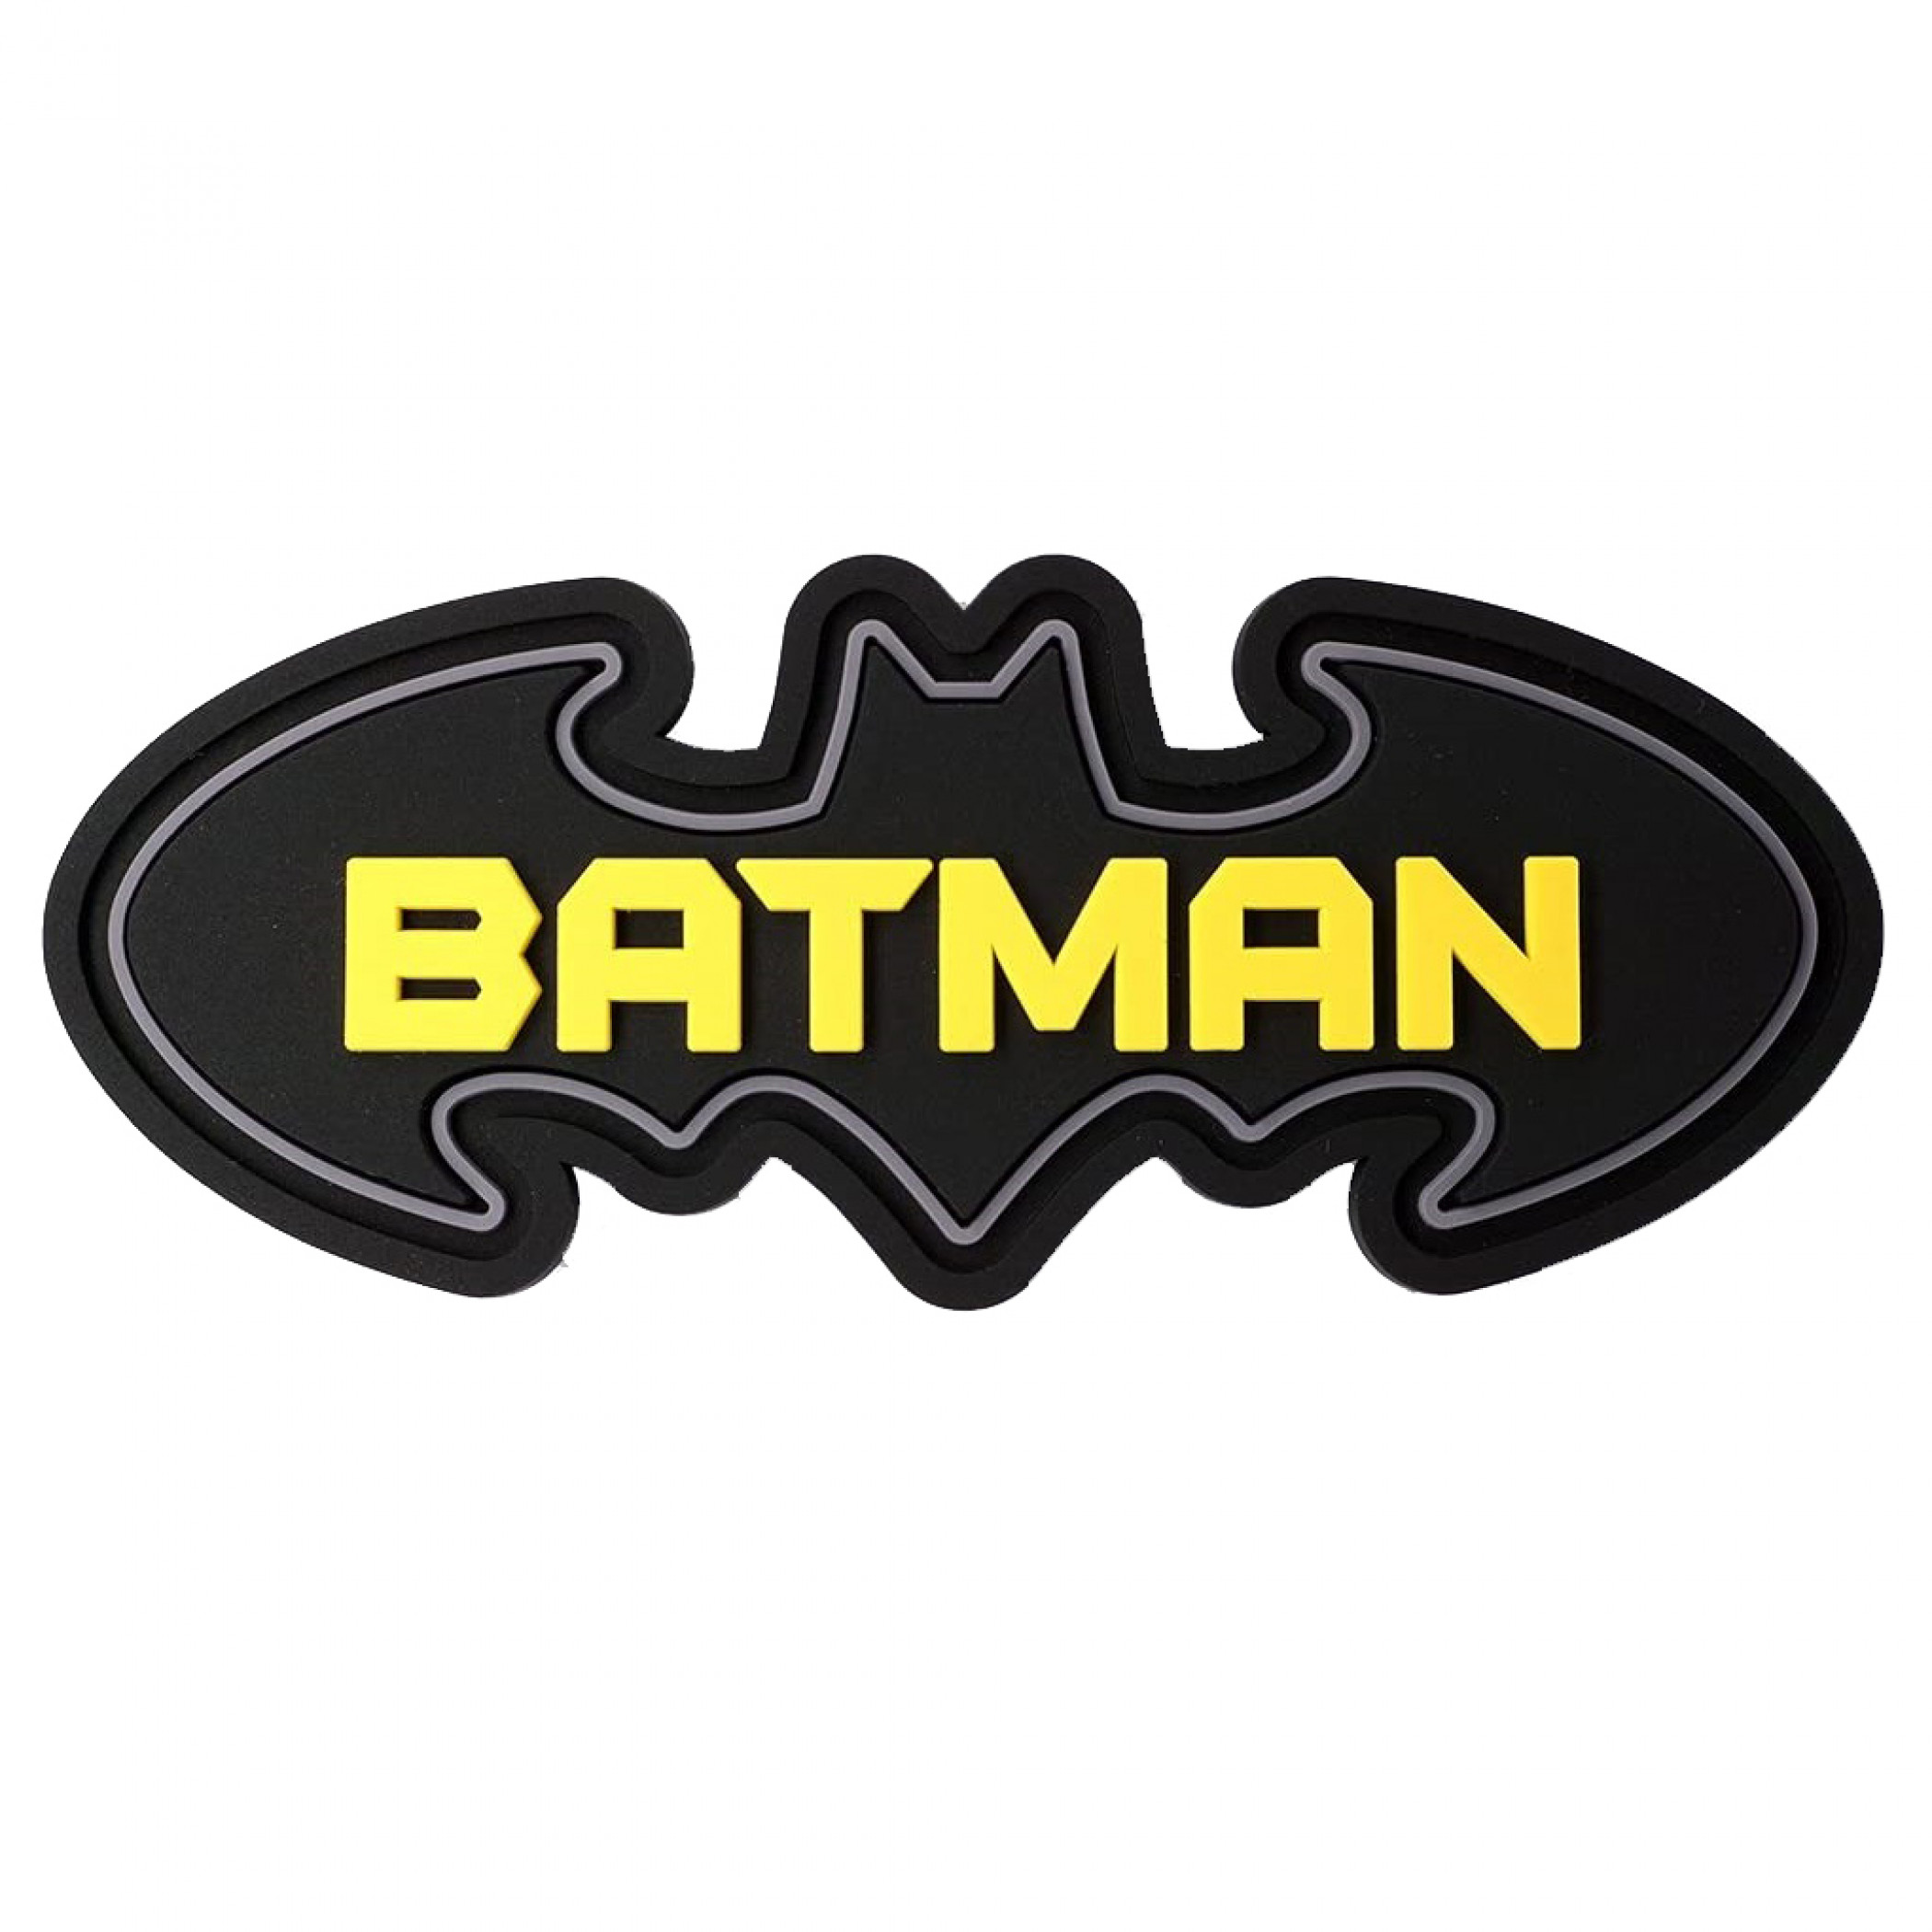 Batman Text in Symbol Soft Touch PVC Magnet